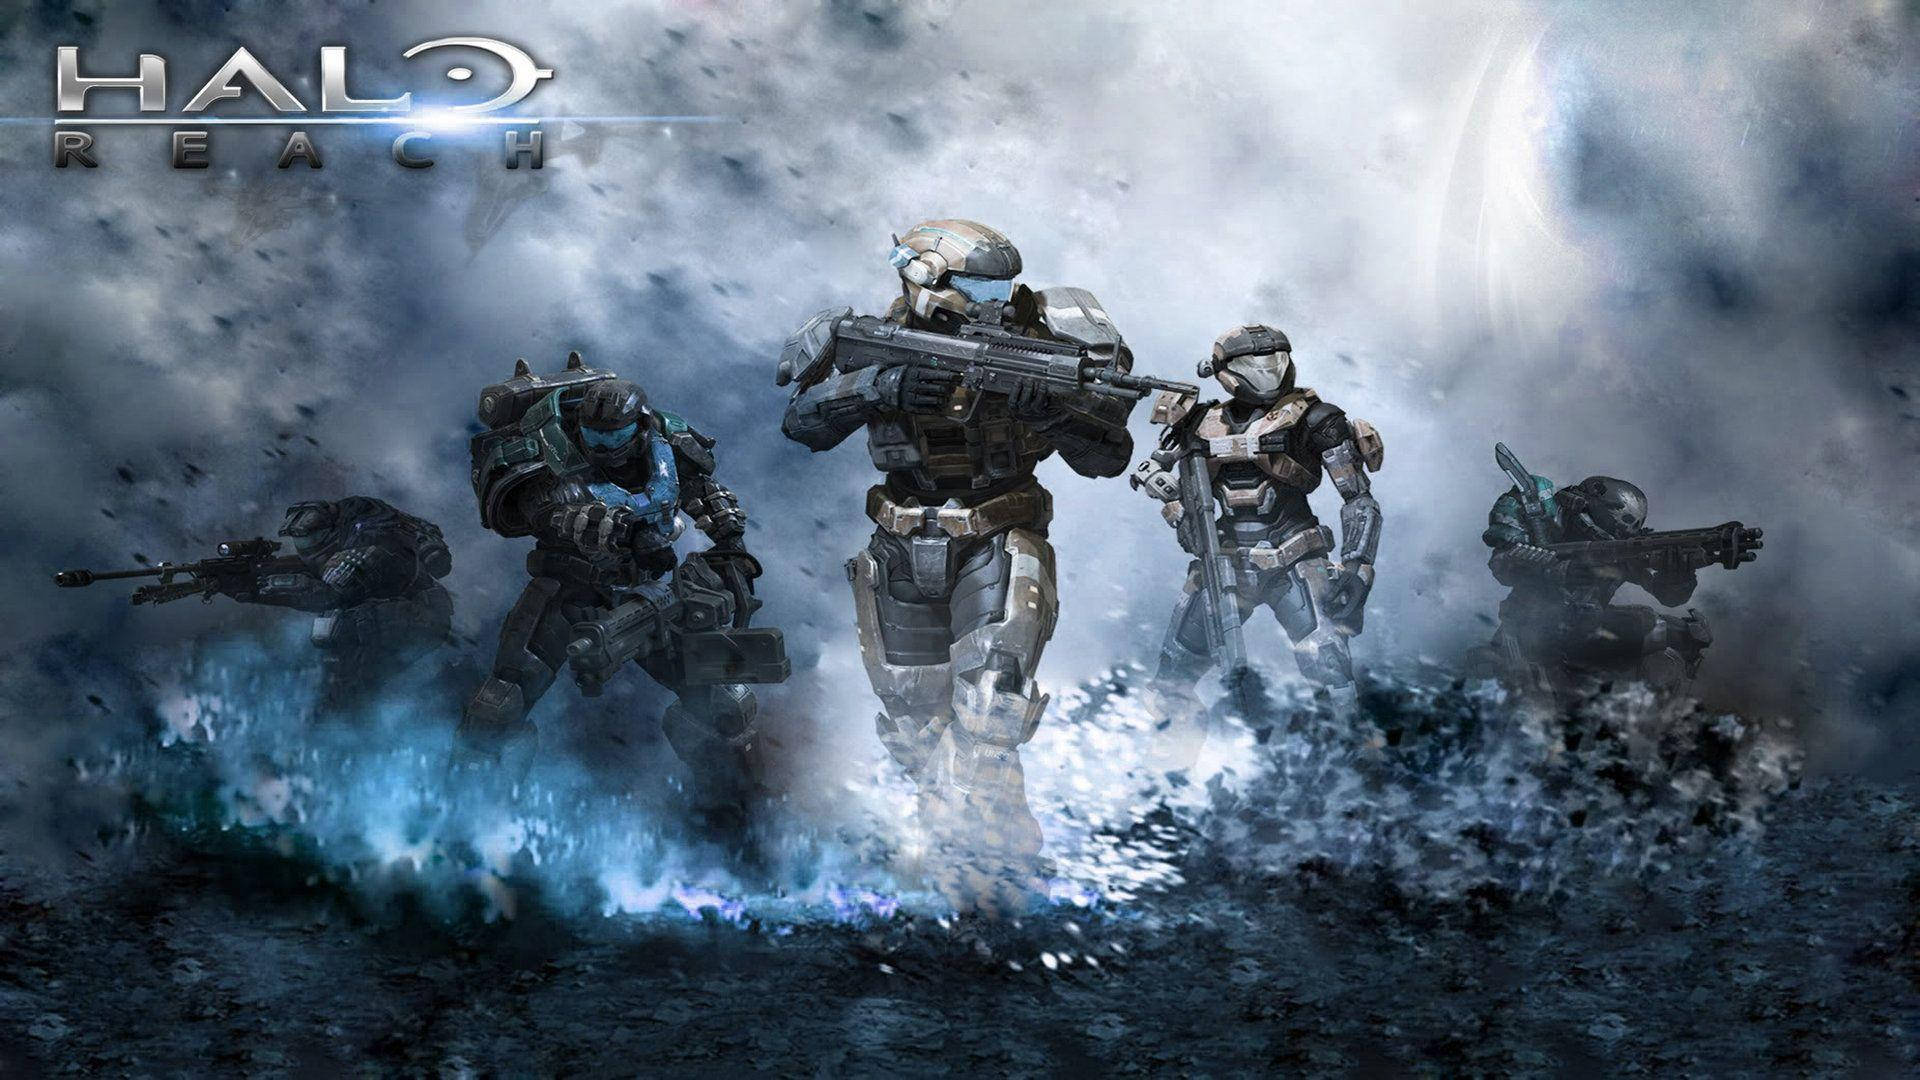 Halo Reach Wallpaper 1080p Background